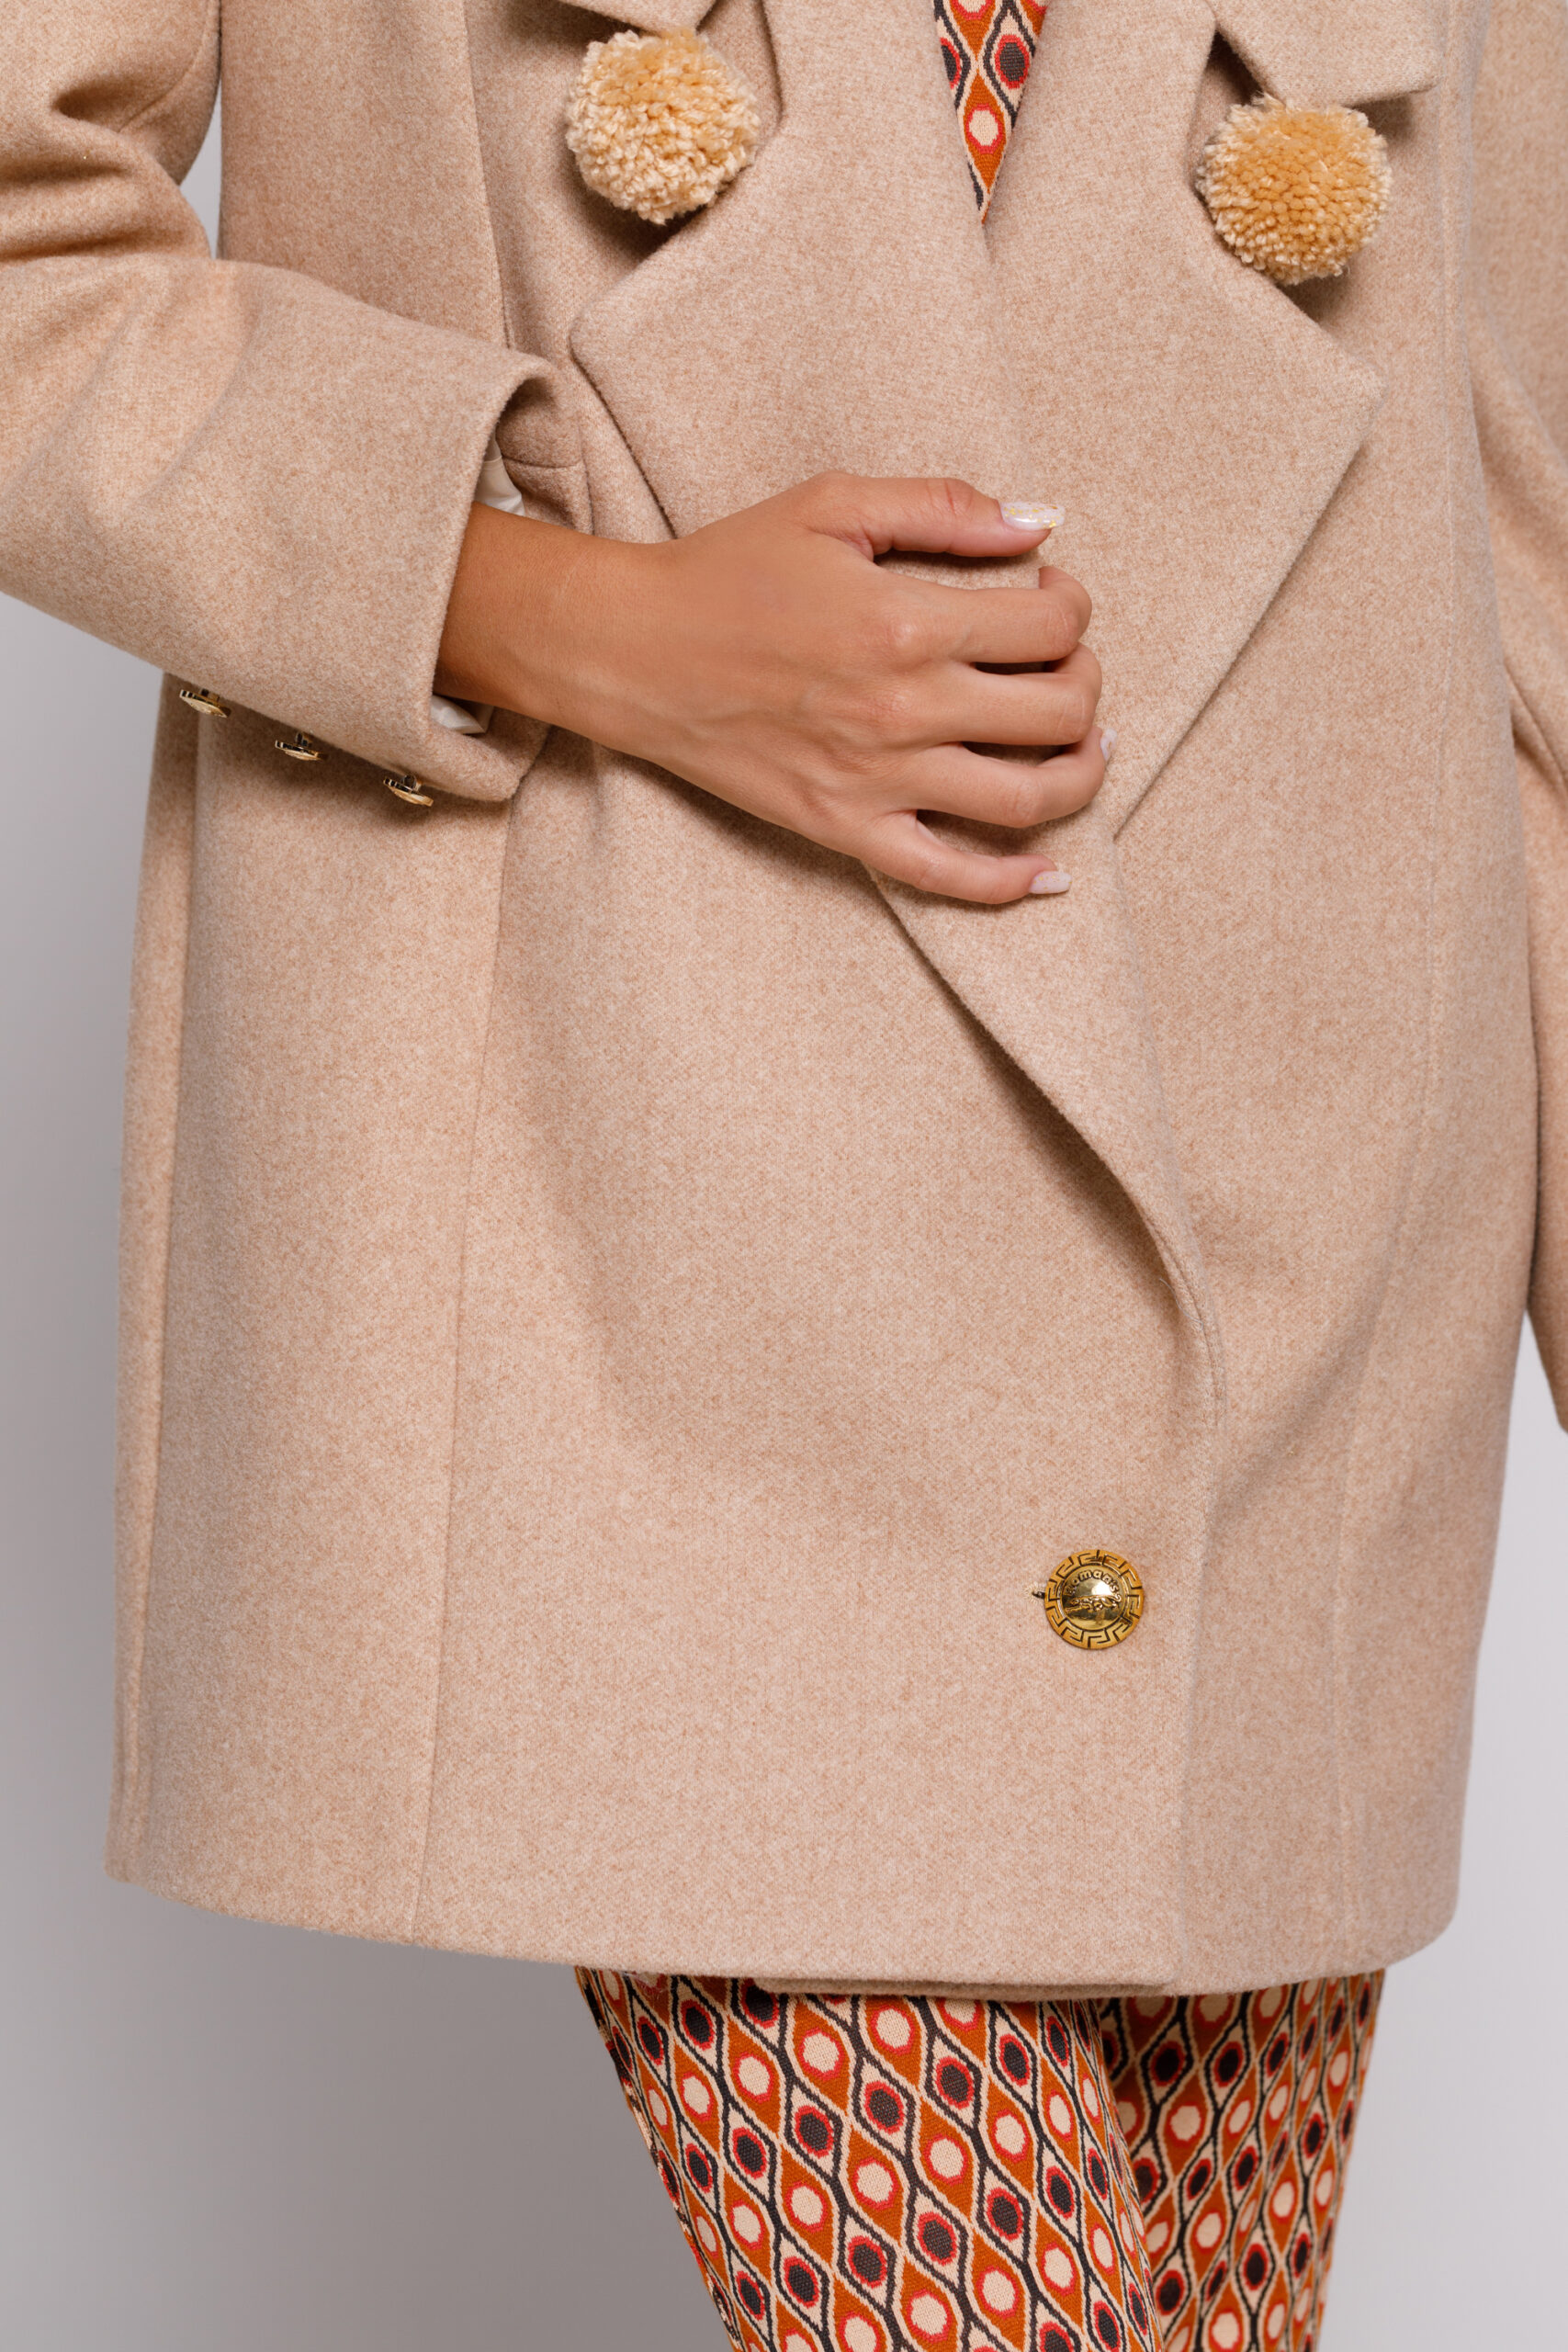 ALIS overcoat in wool fabric with tassels. Natural fabrics, original design, handmade embroidery